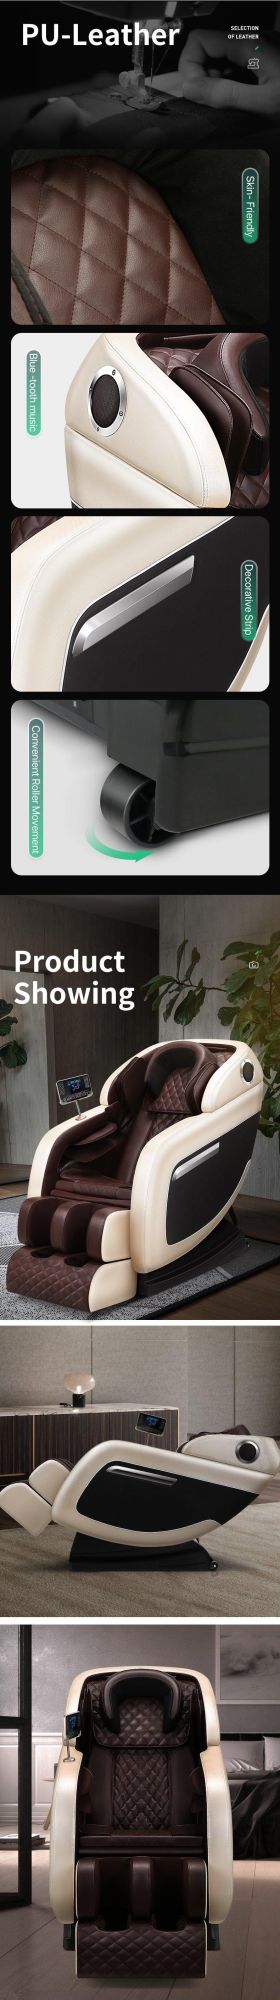 2020 Hot Sale Luxury Full Body Portable Massage Chair